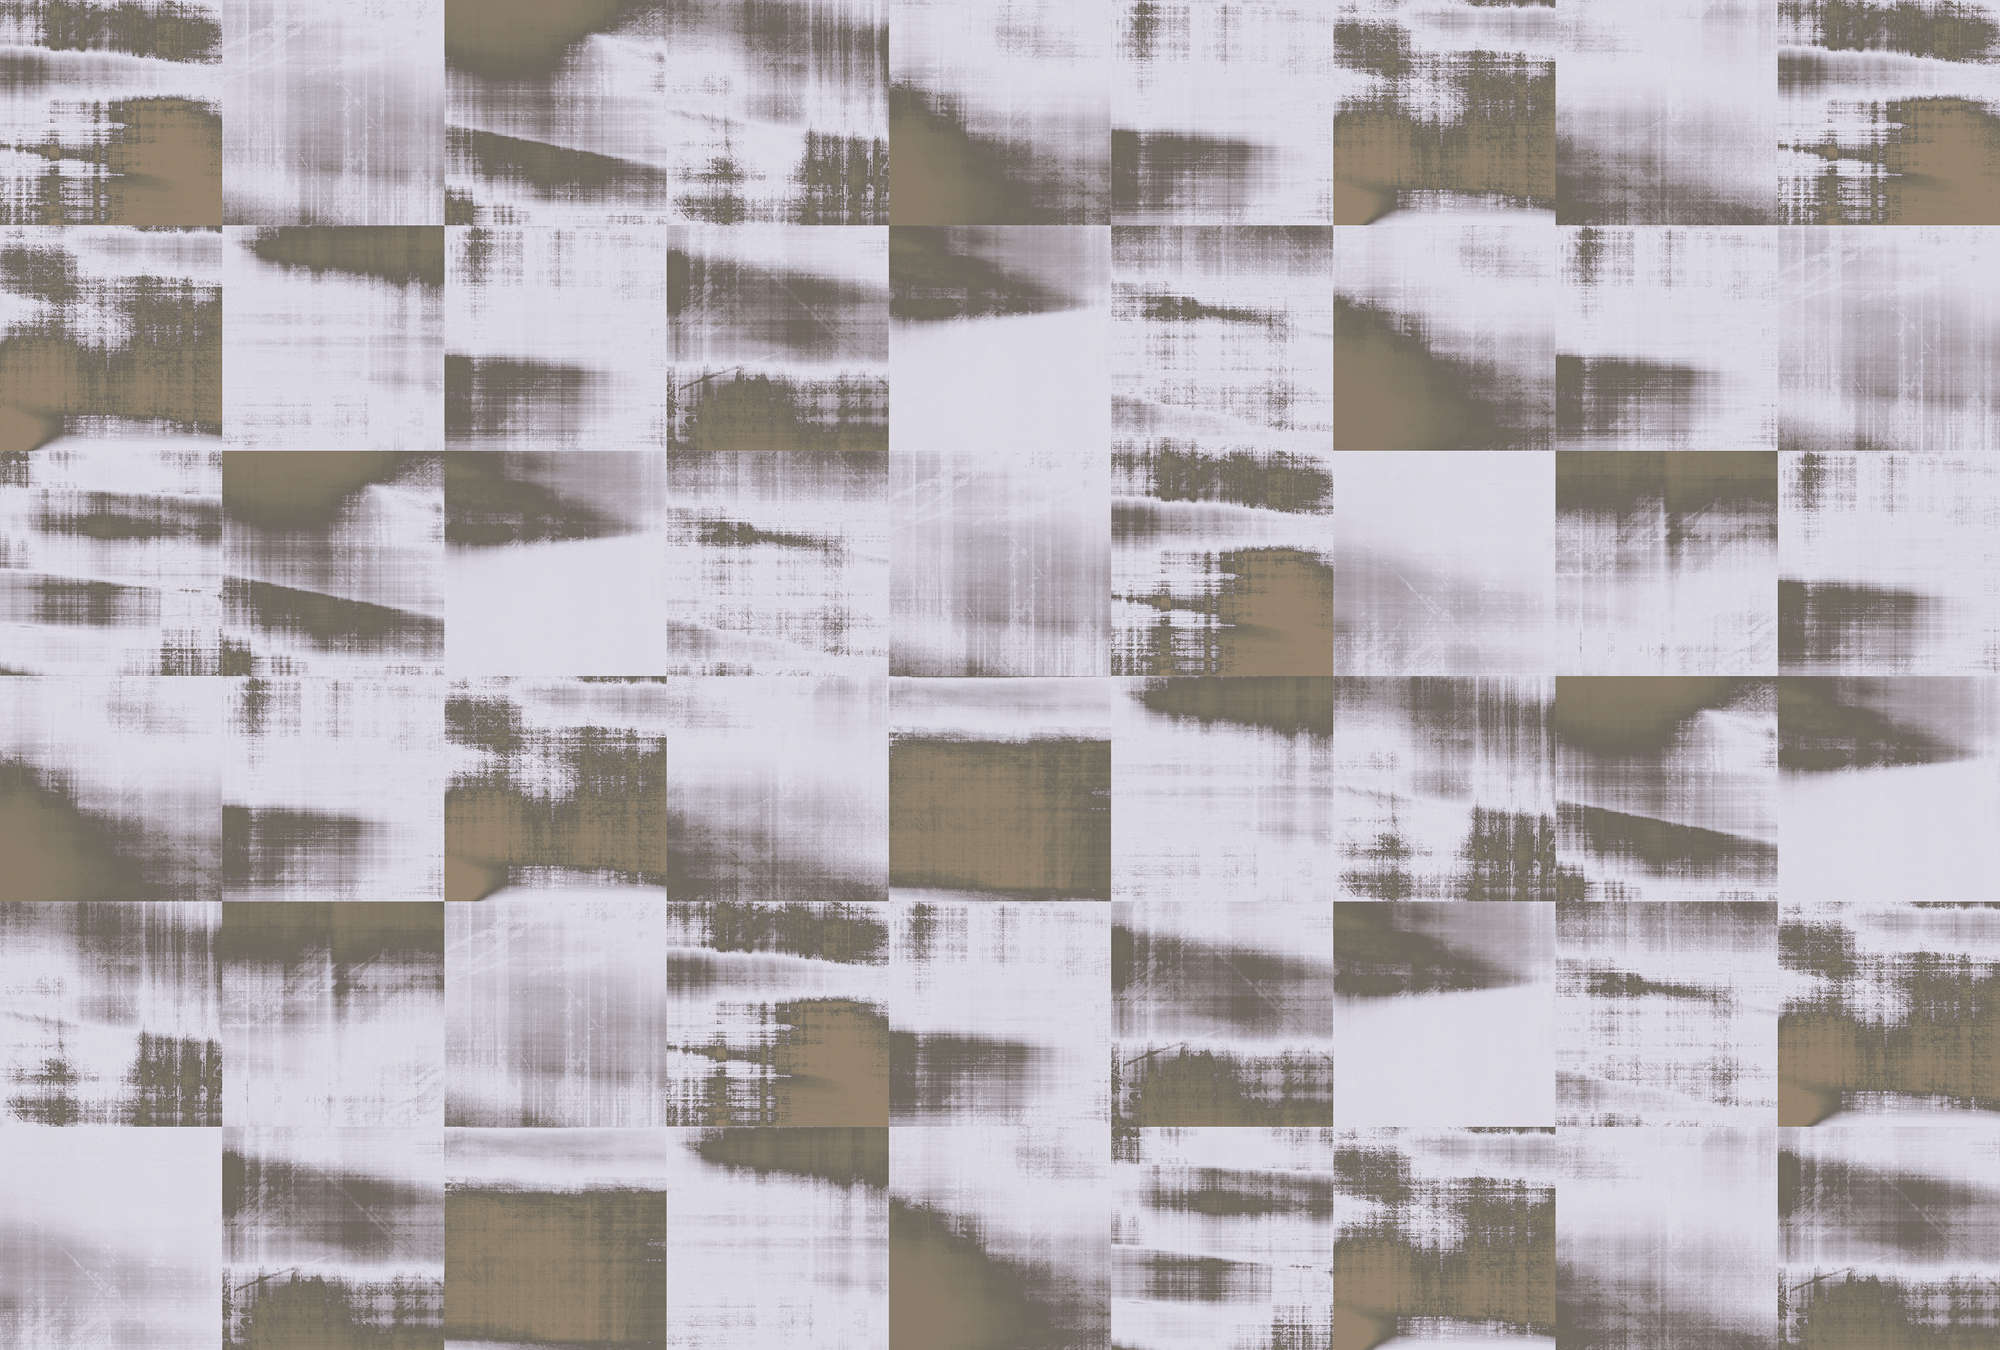             Fototapete Quadrat-Muster, Bild vom See – Braun, Weiß
        